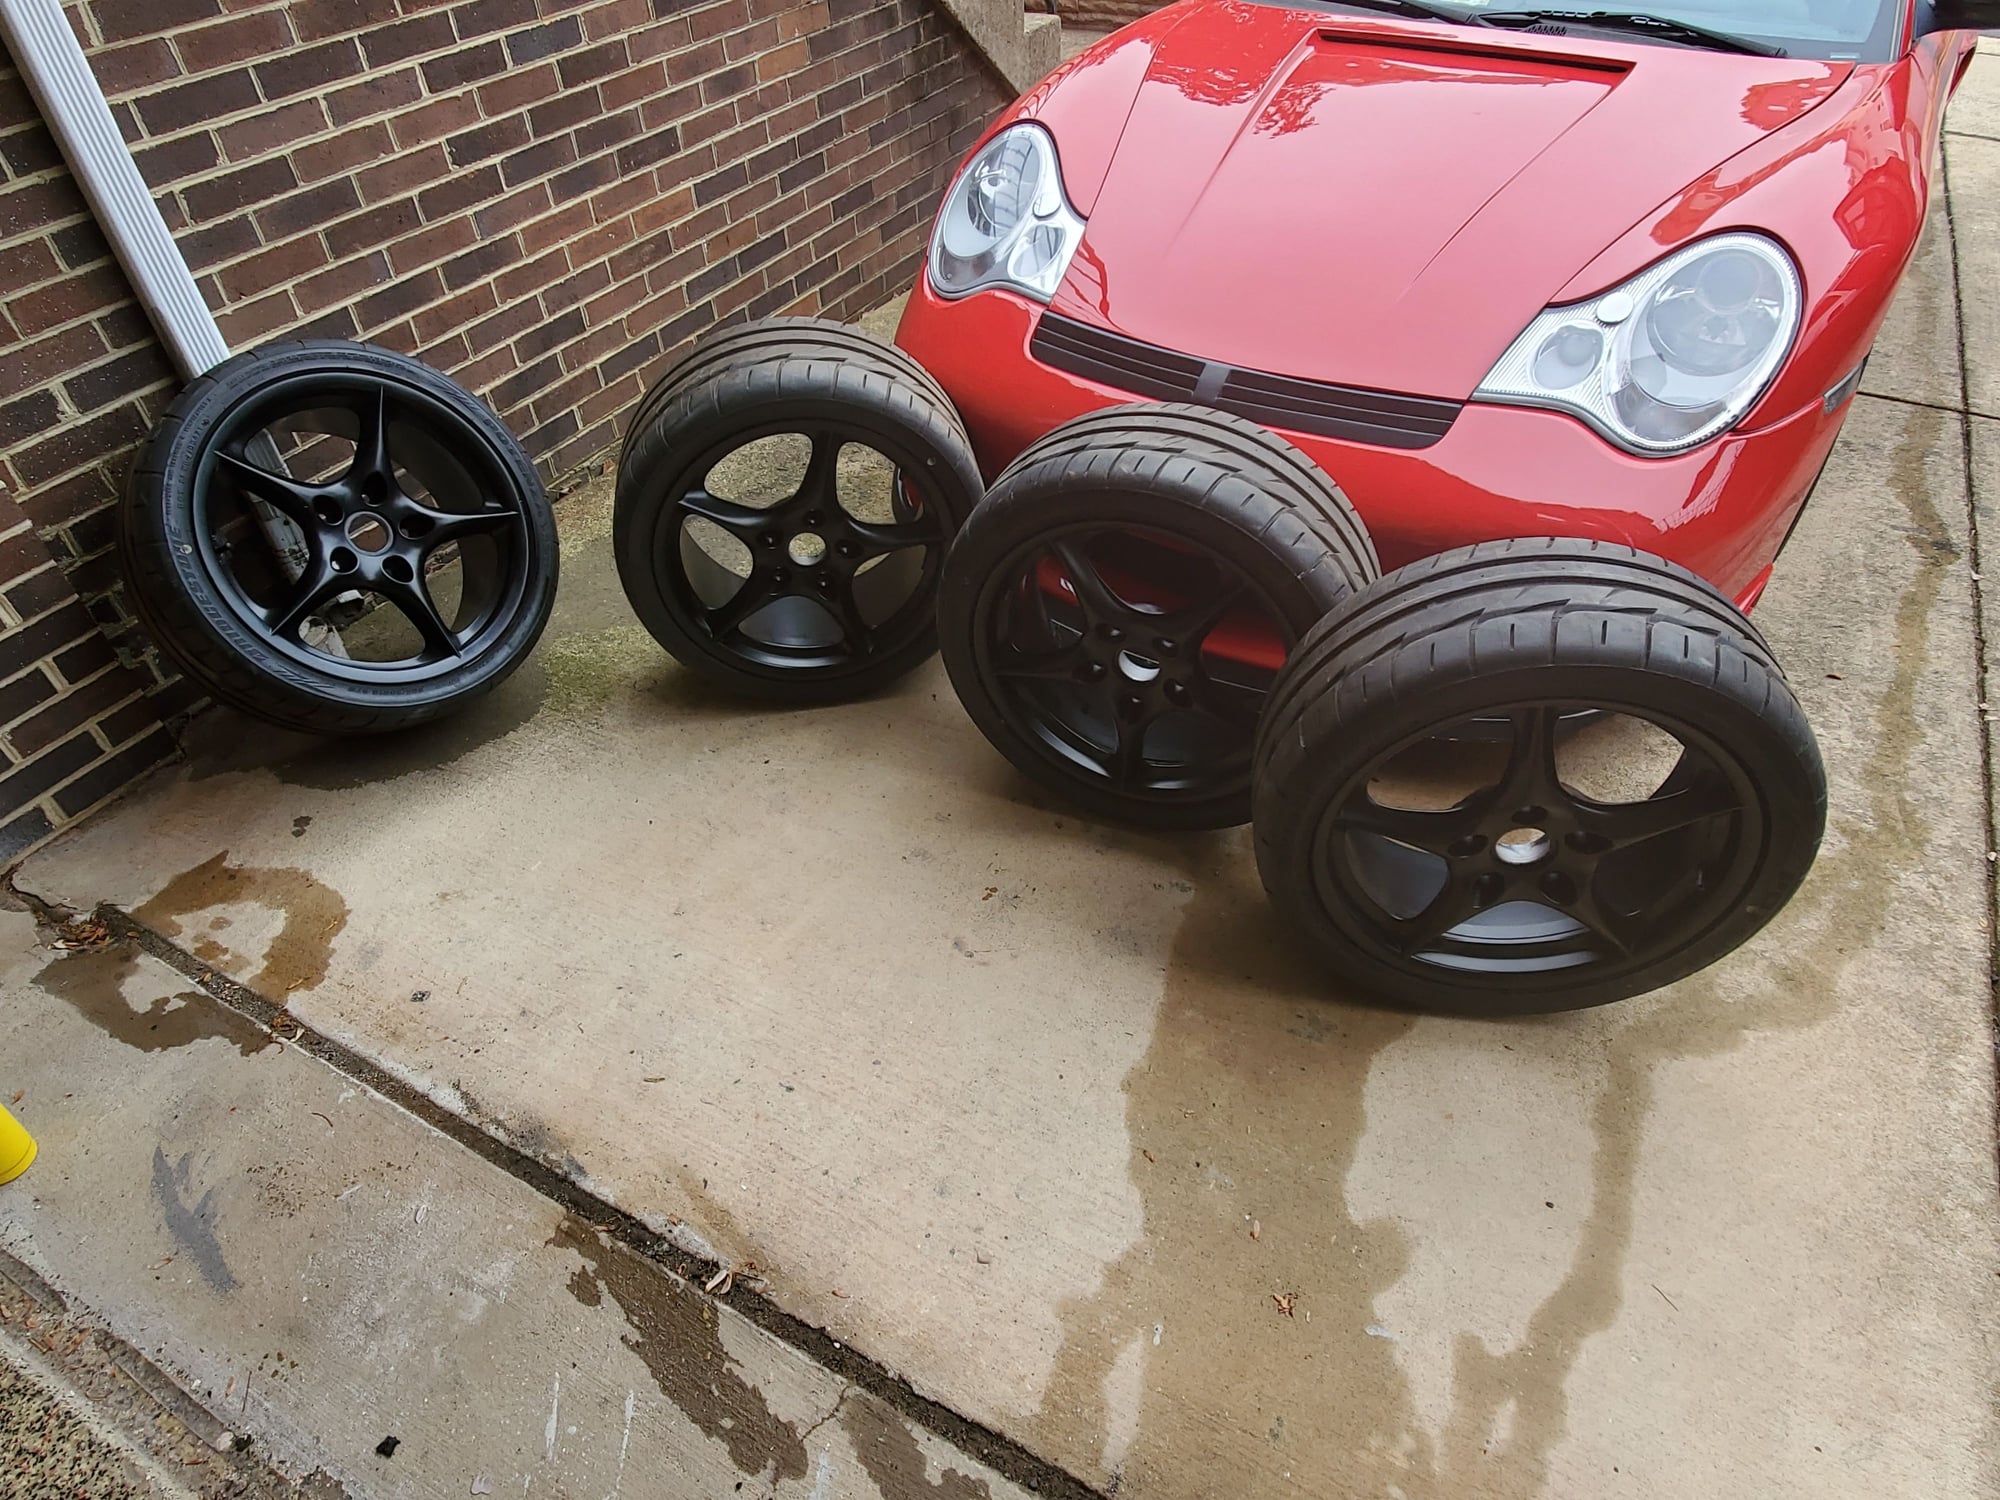 Wheels and Tires/Axles - FS - 996 MY02 lightweight 5 spokes, new Bridgestone Potenza RE11's - New - Potomac Falls, VA 20165, United States